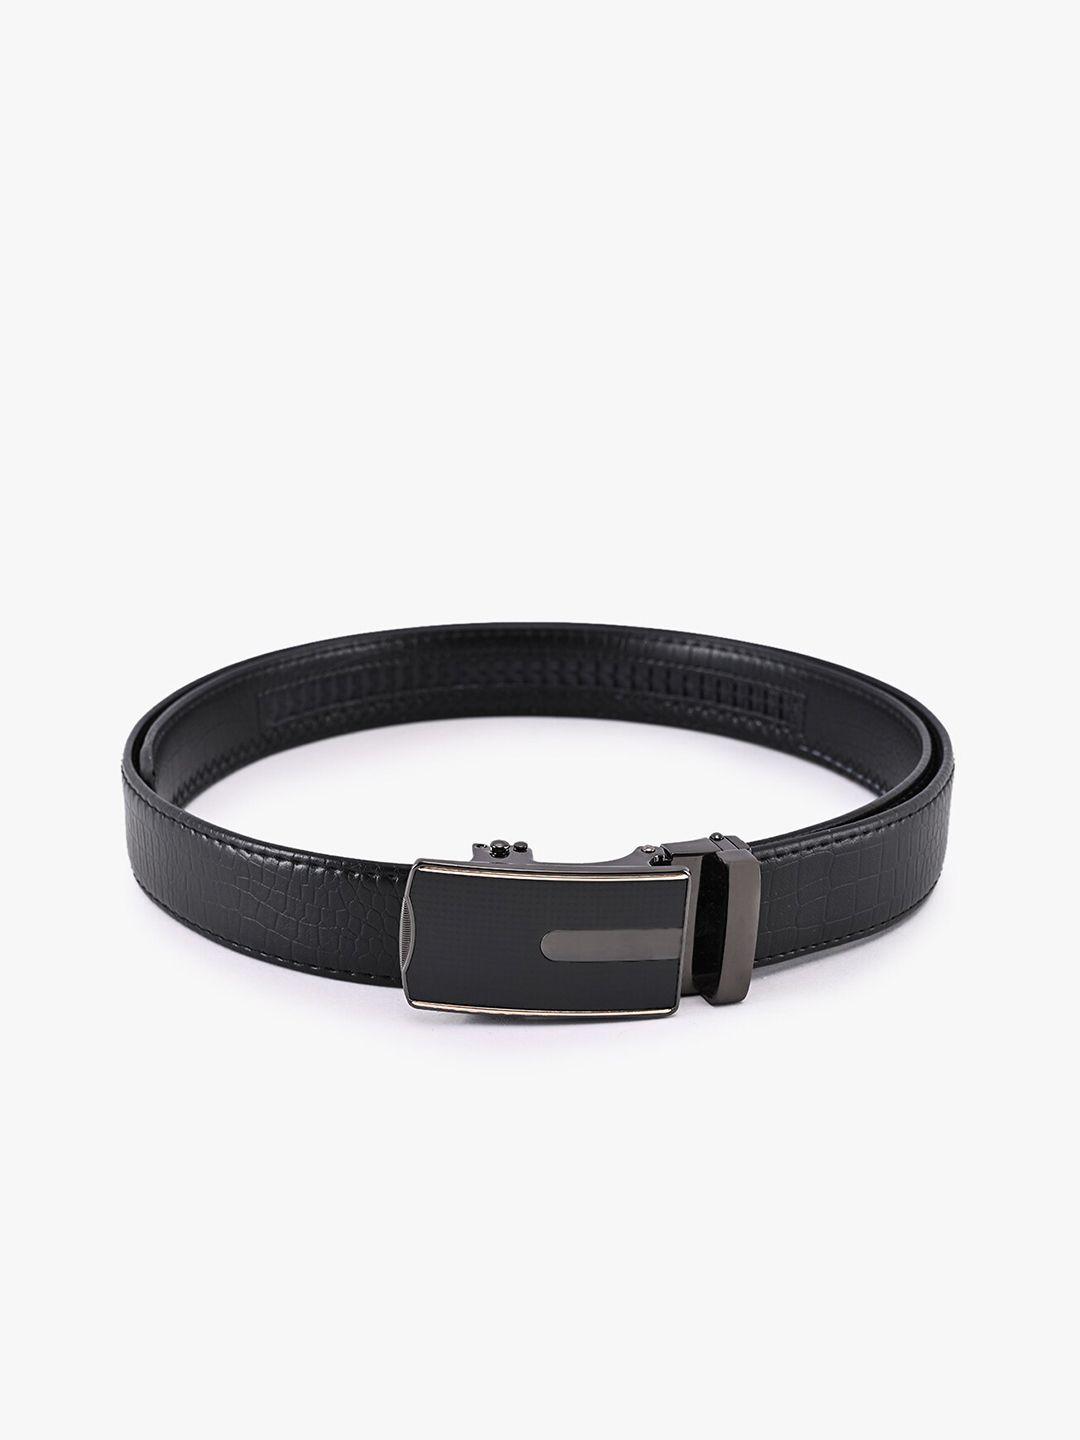 buckleup men black formal synthetic leather belt